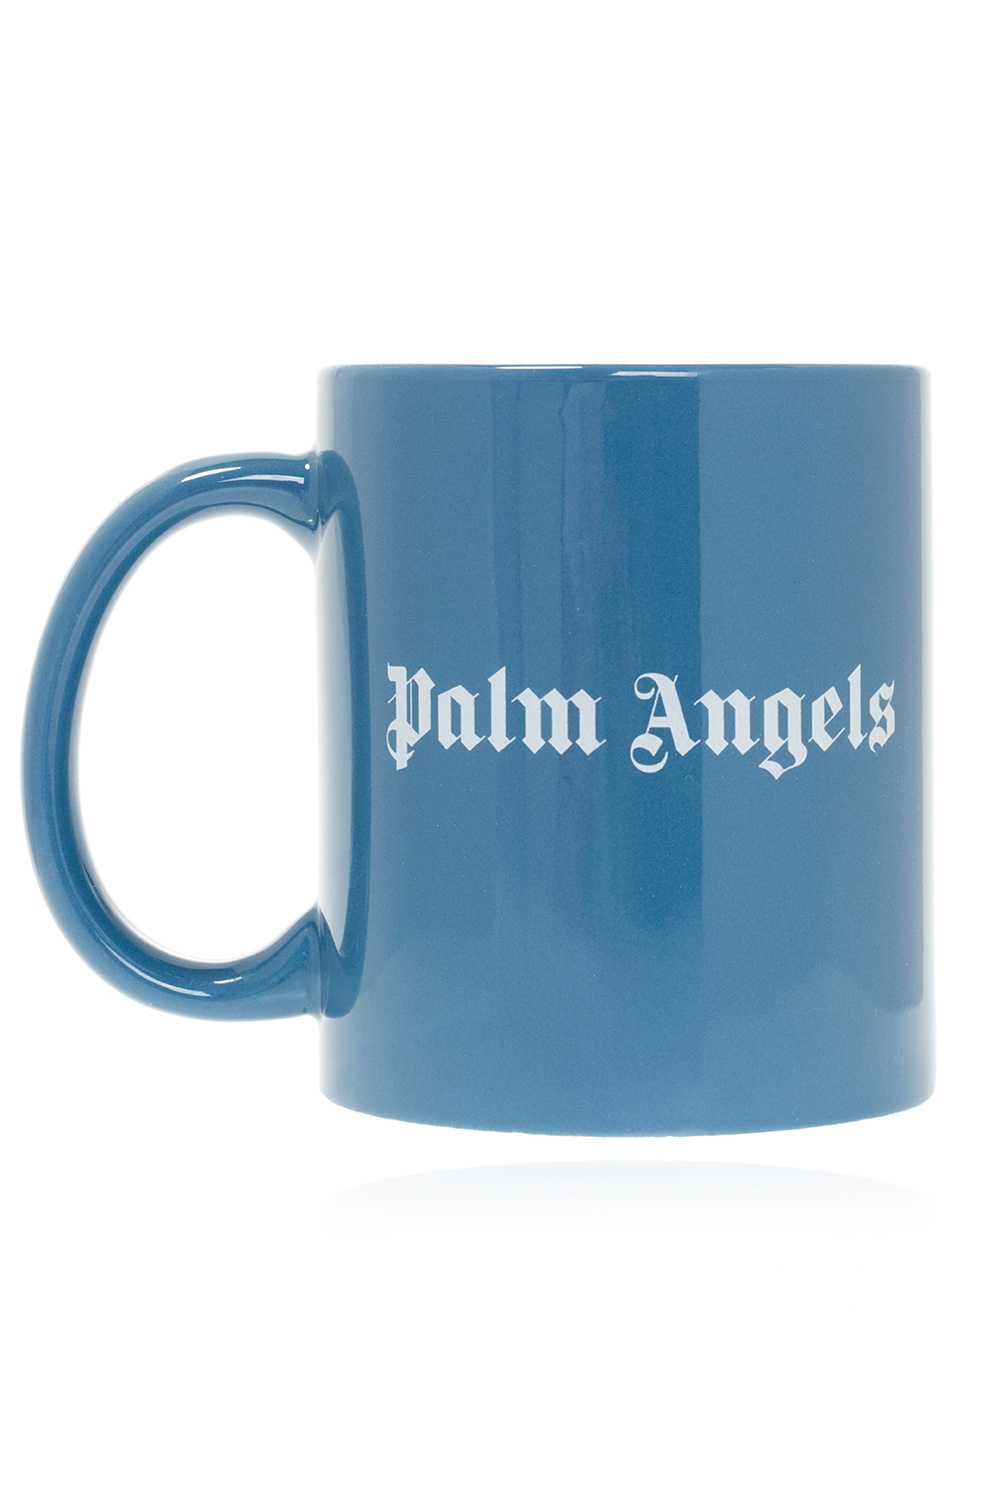 Palm Angels Mug with logo